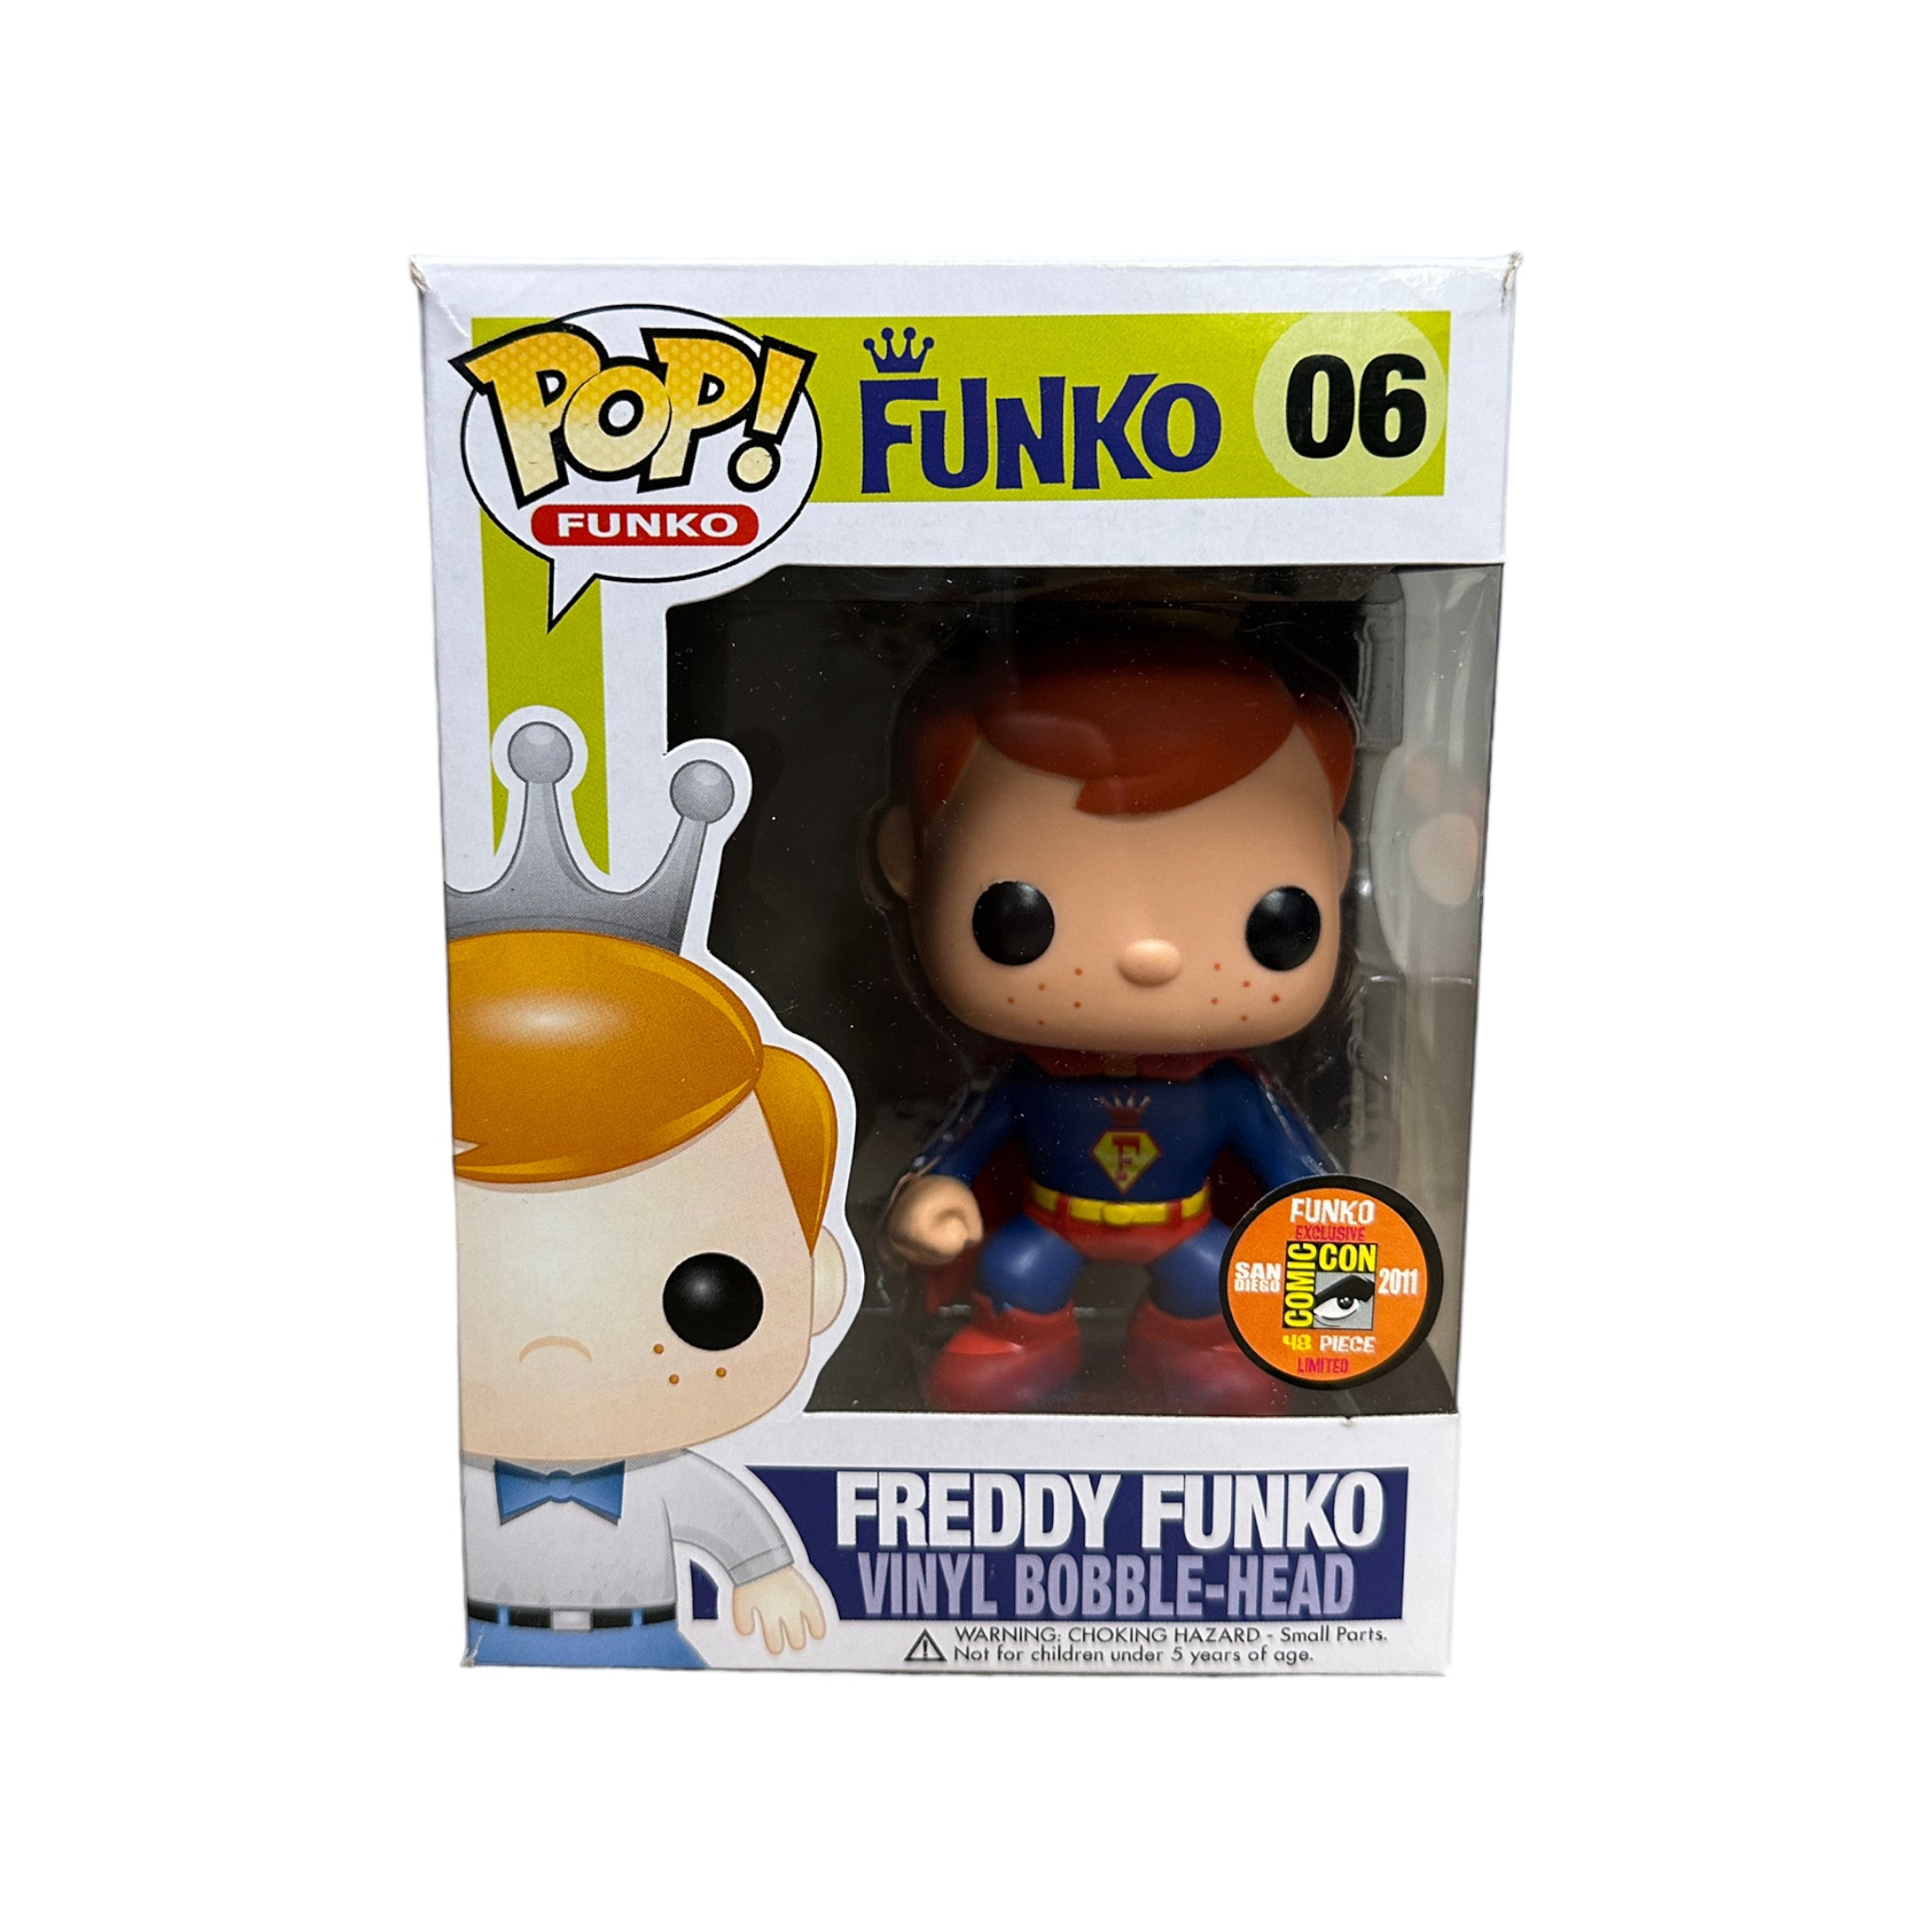 Freddy Funko as Superman #06 Funko Pop! - SDCC 2011 Exclusive LE48 Pcs - Condition 6/10